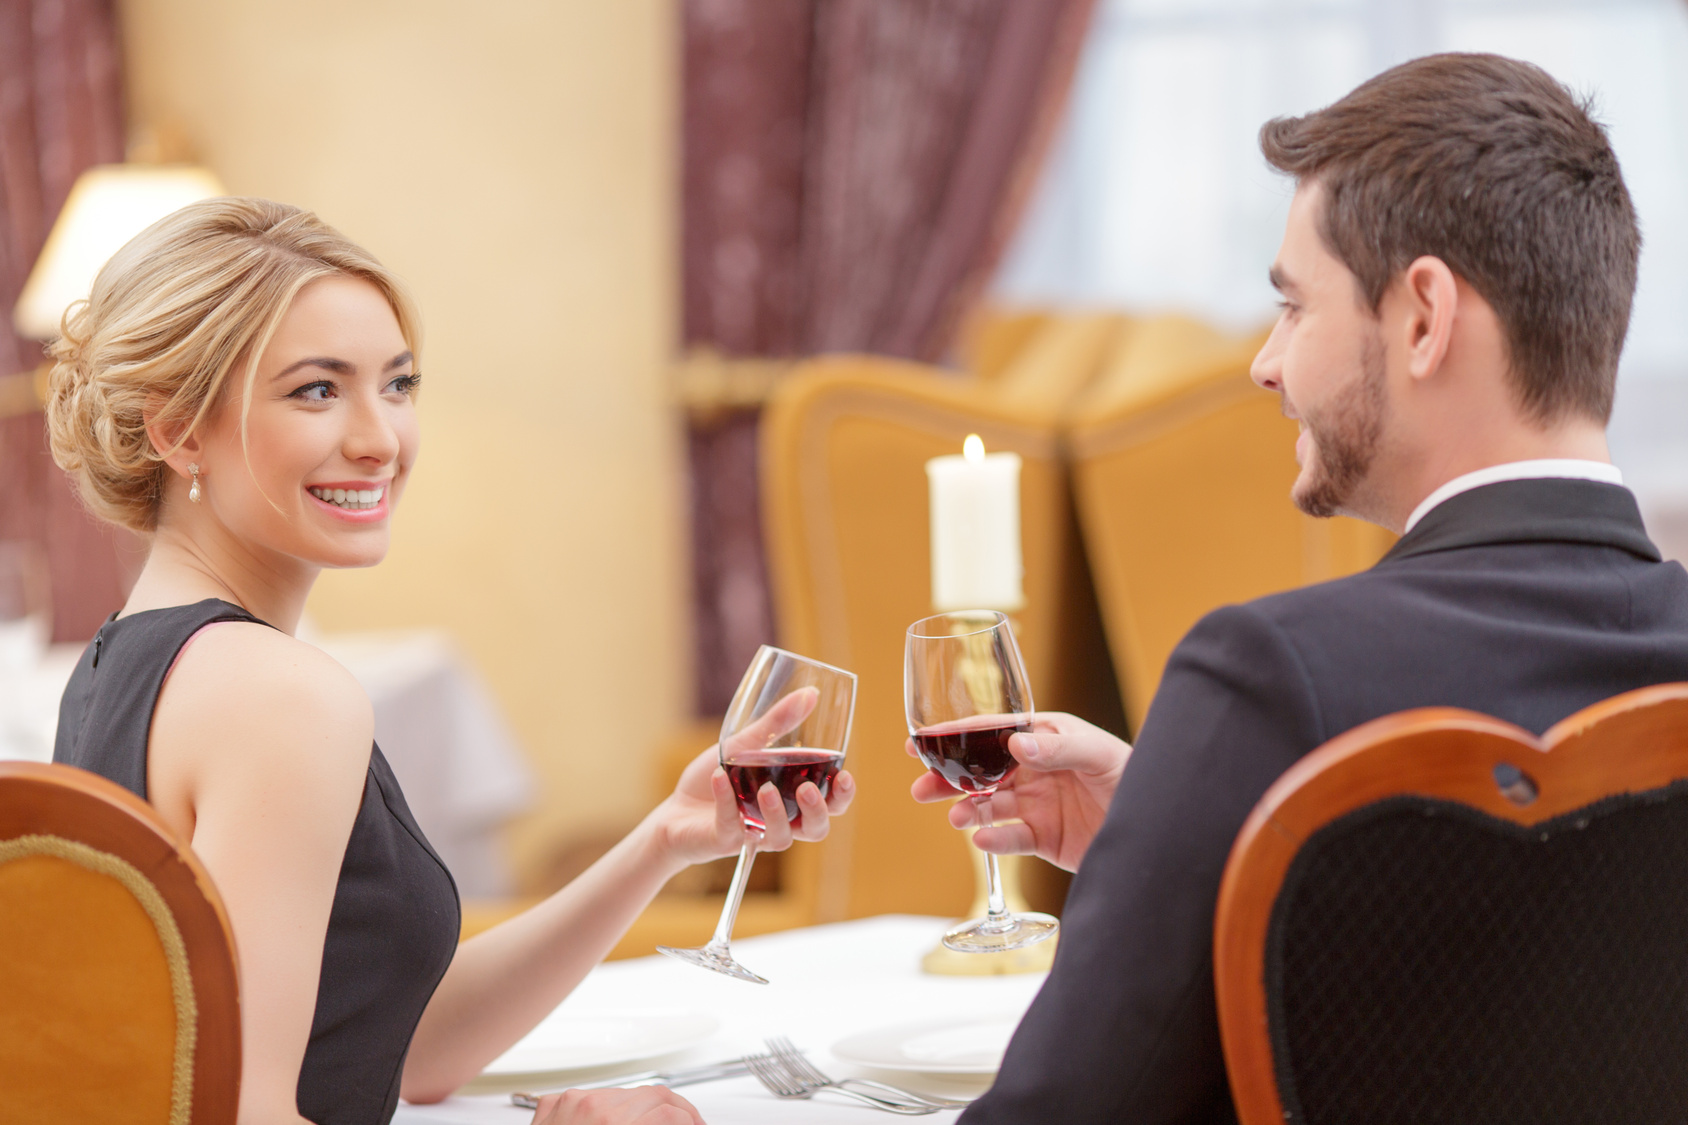 Attractive couple visiting luxury restaurant